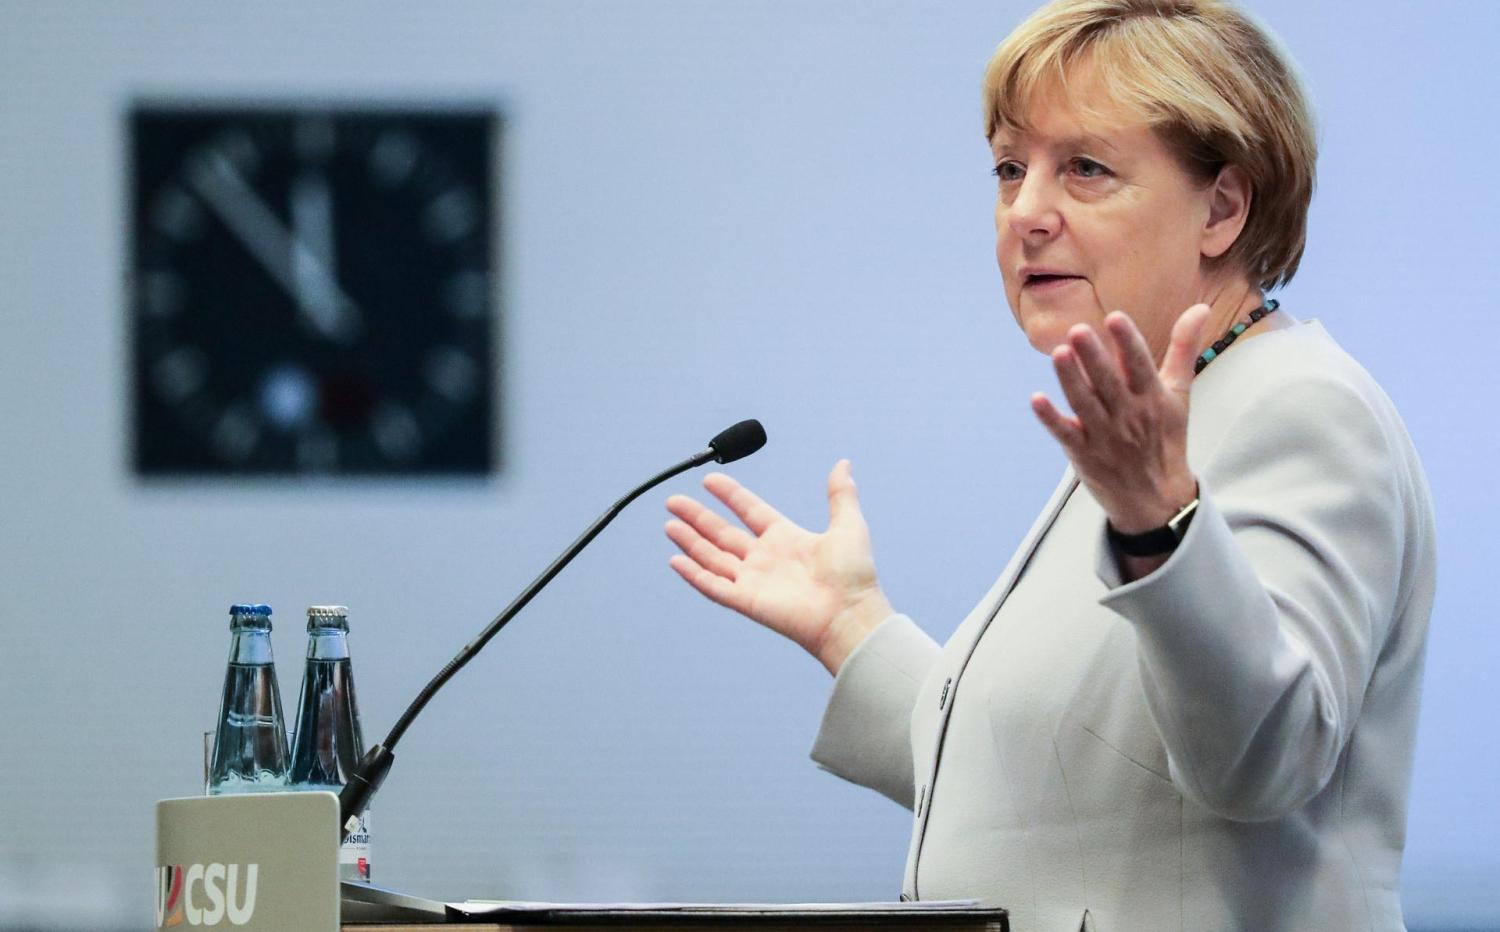 'Alternativlos'? The future of Angela Merkel's chancellorship